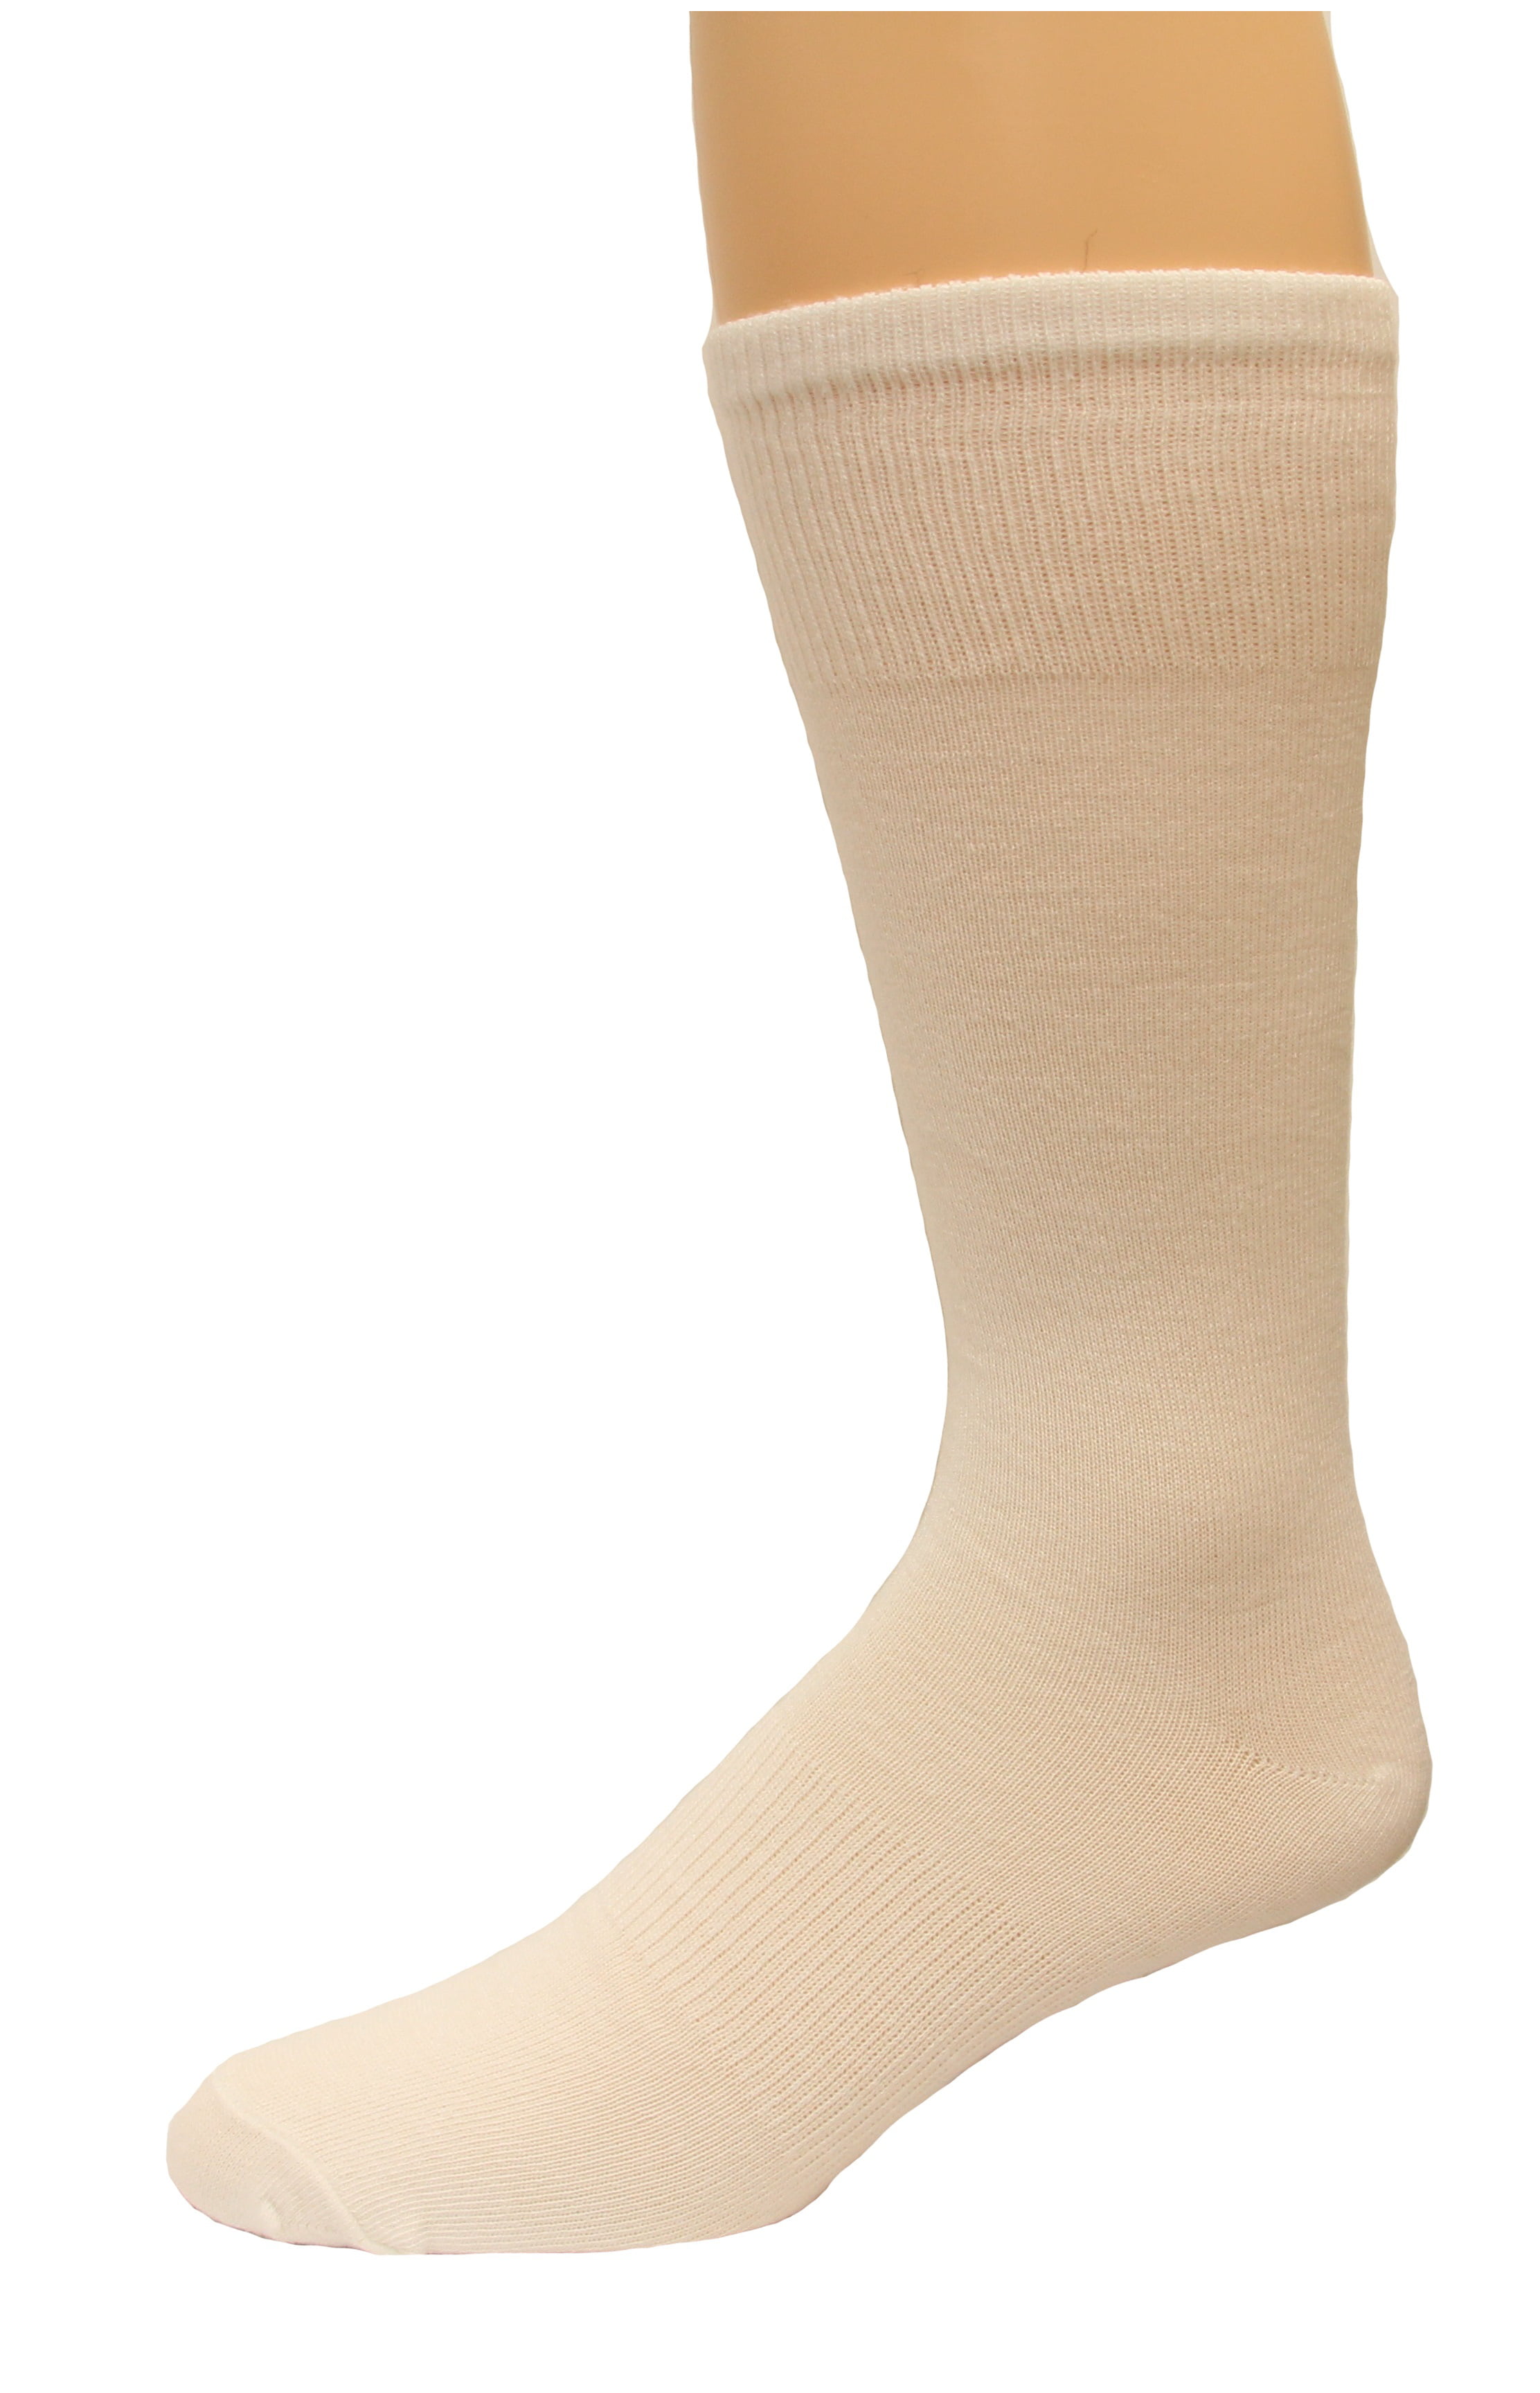 Realtree Socks Size Chart